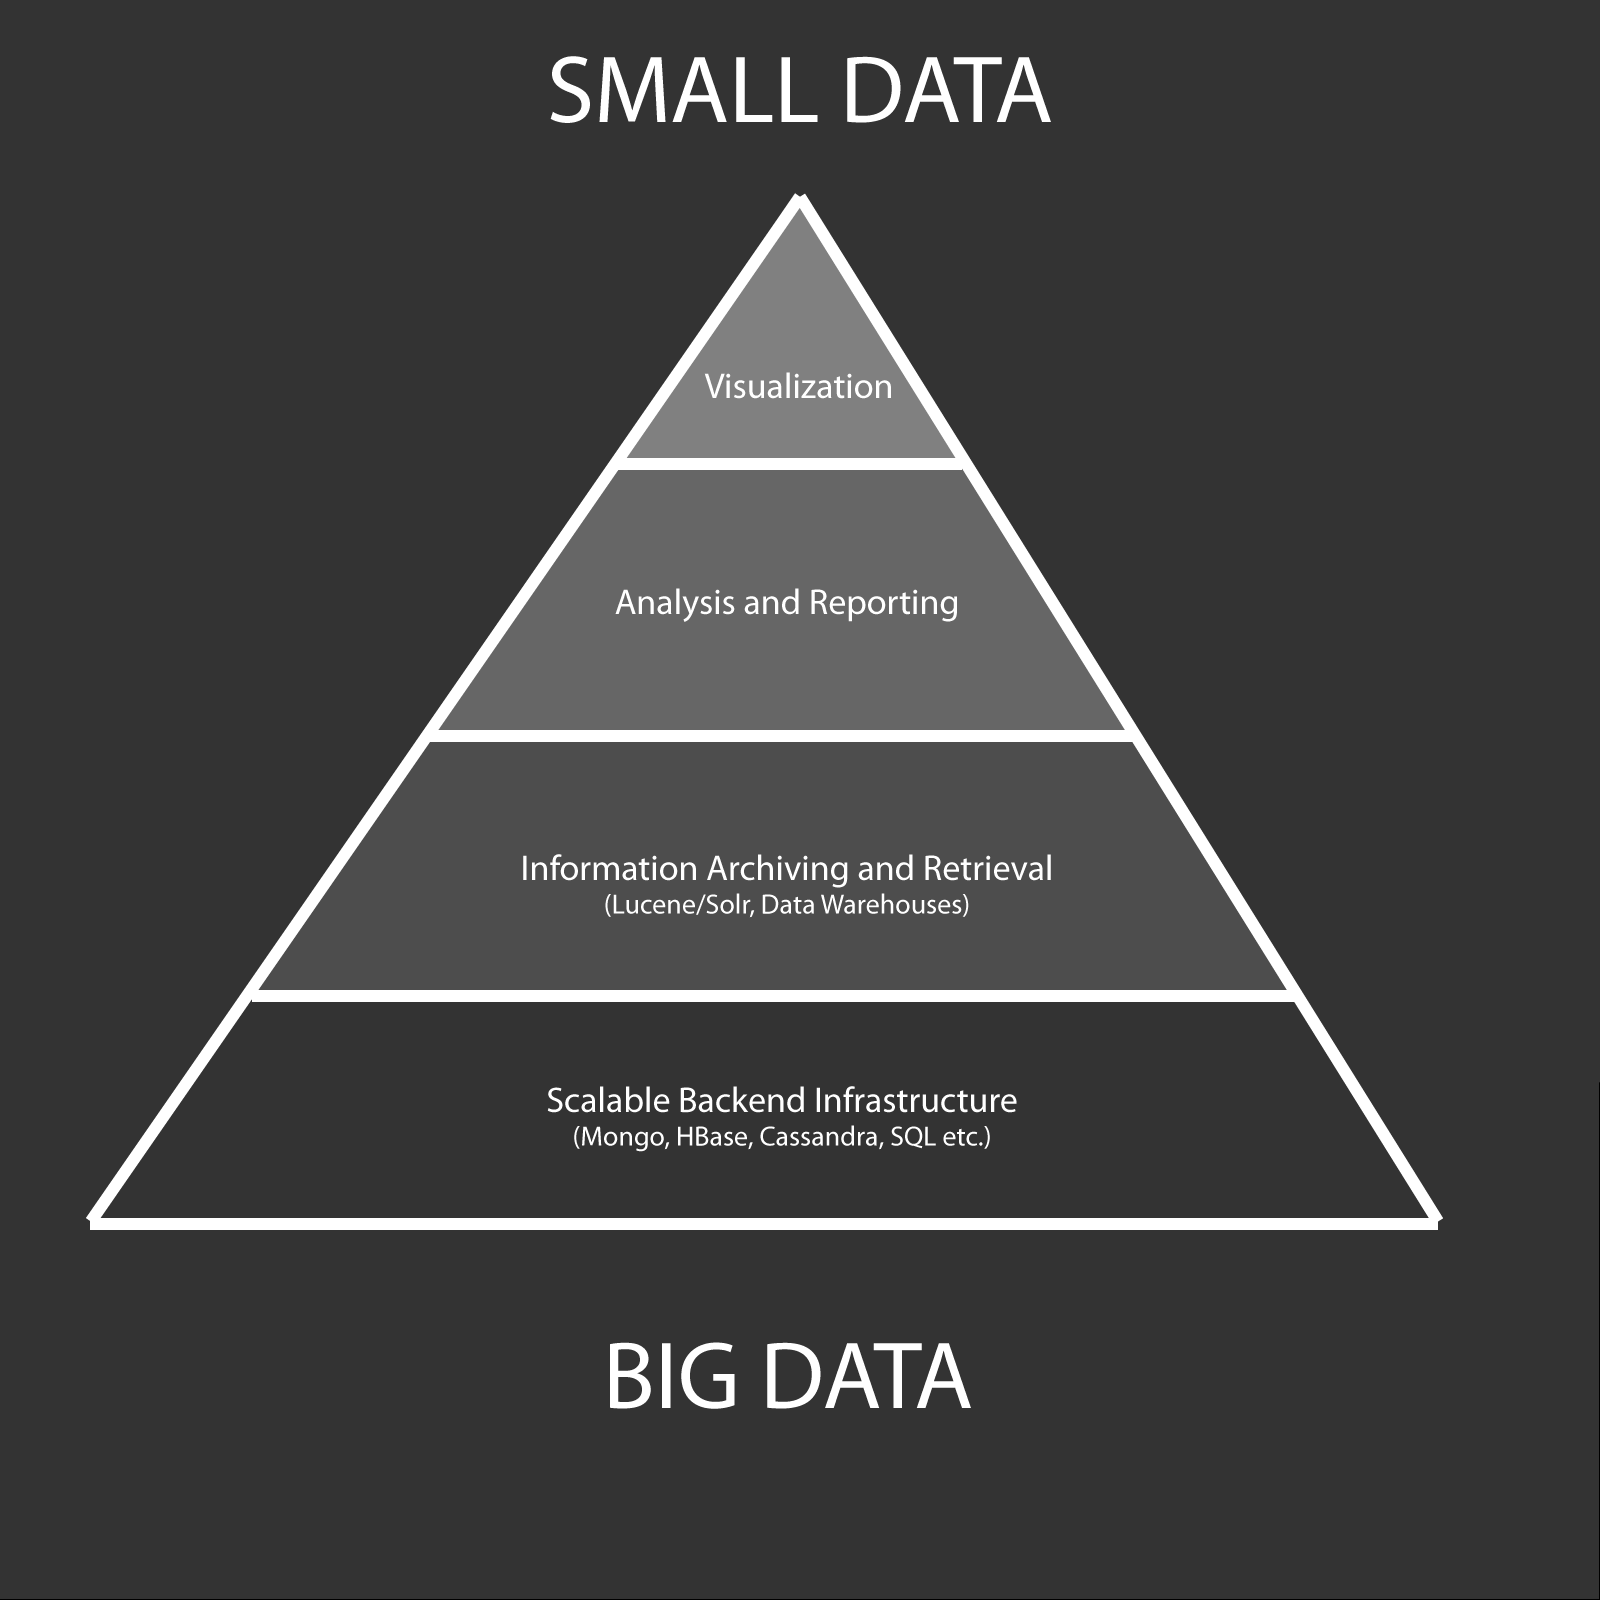 future of big data